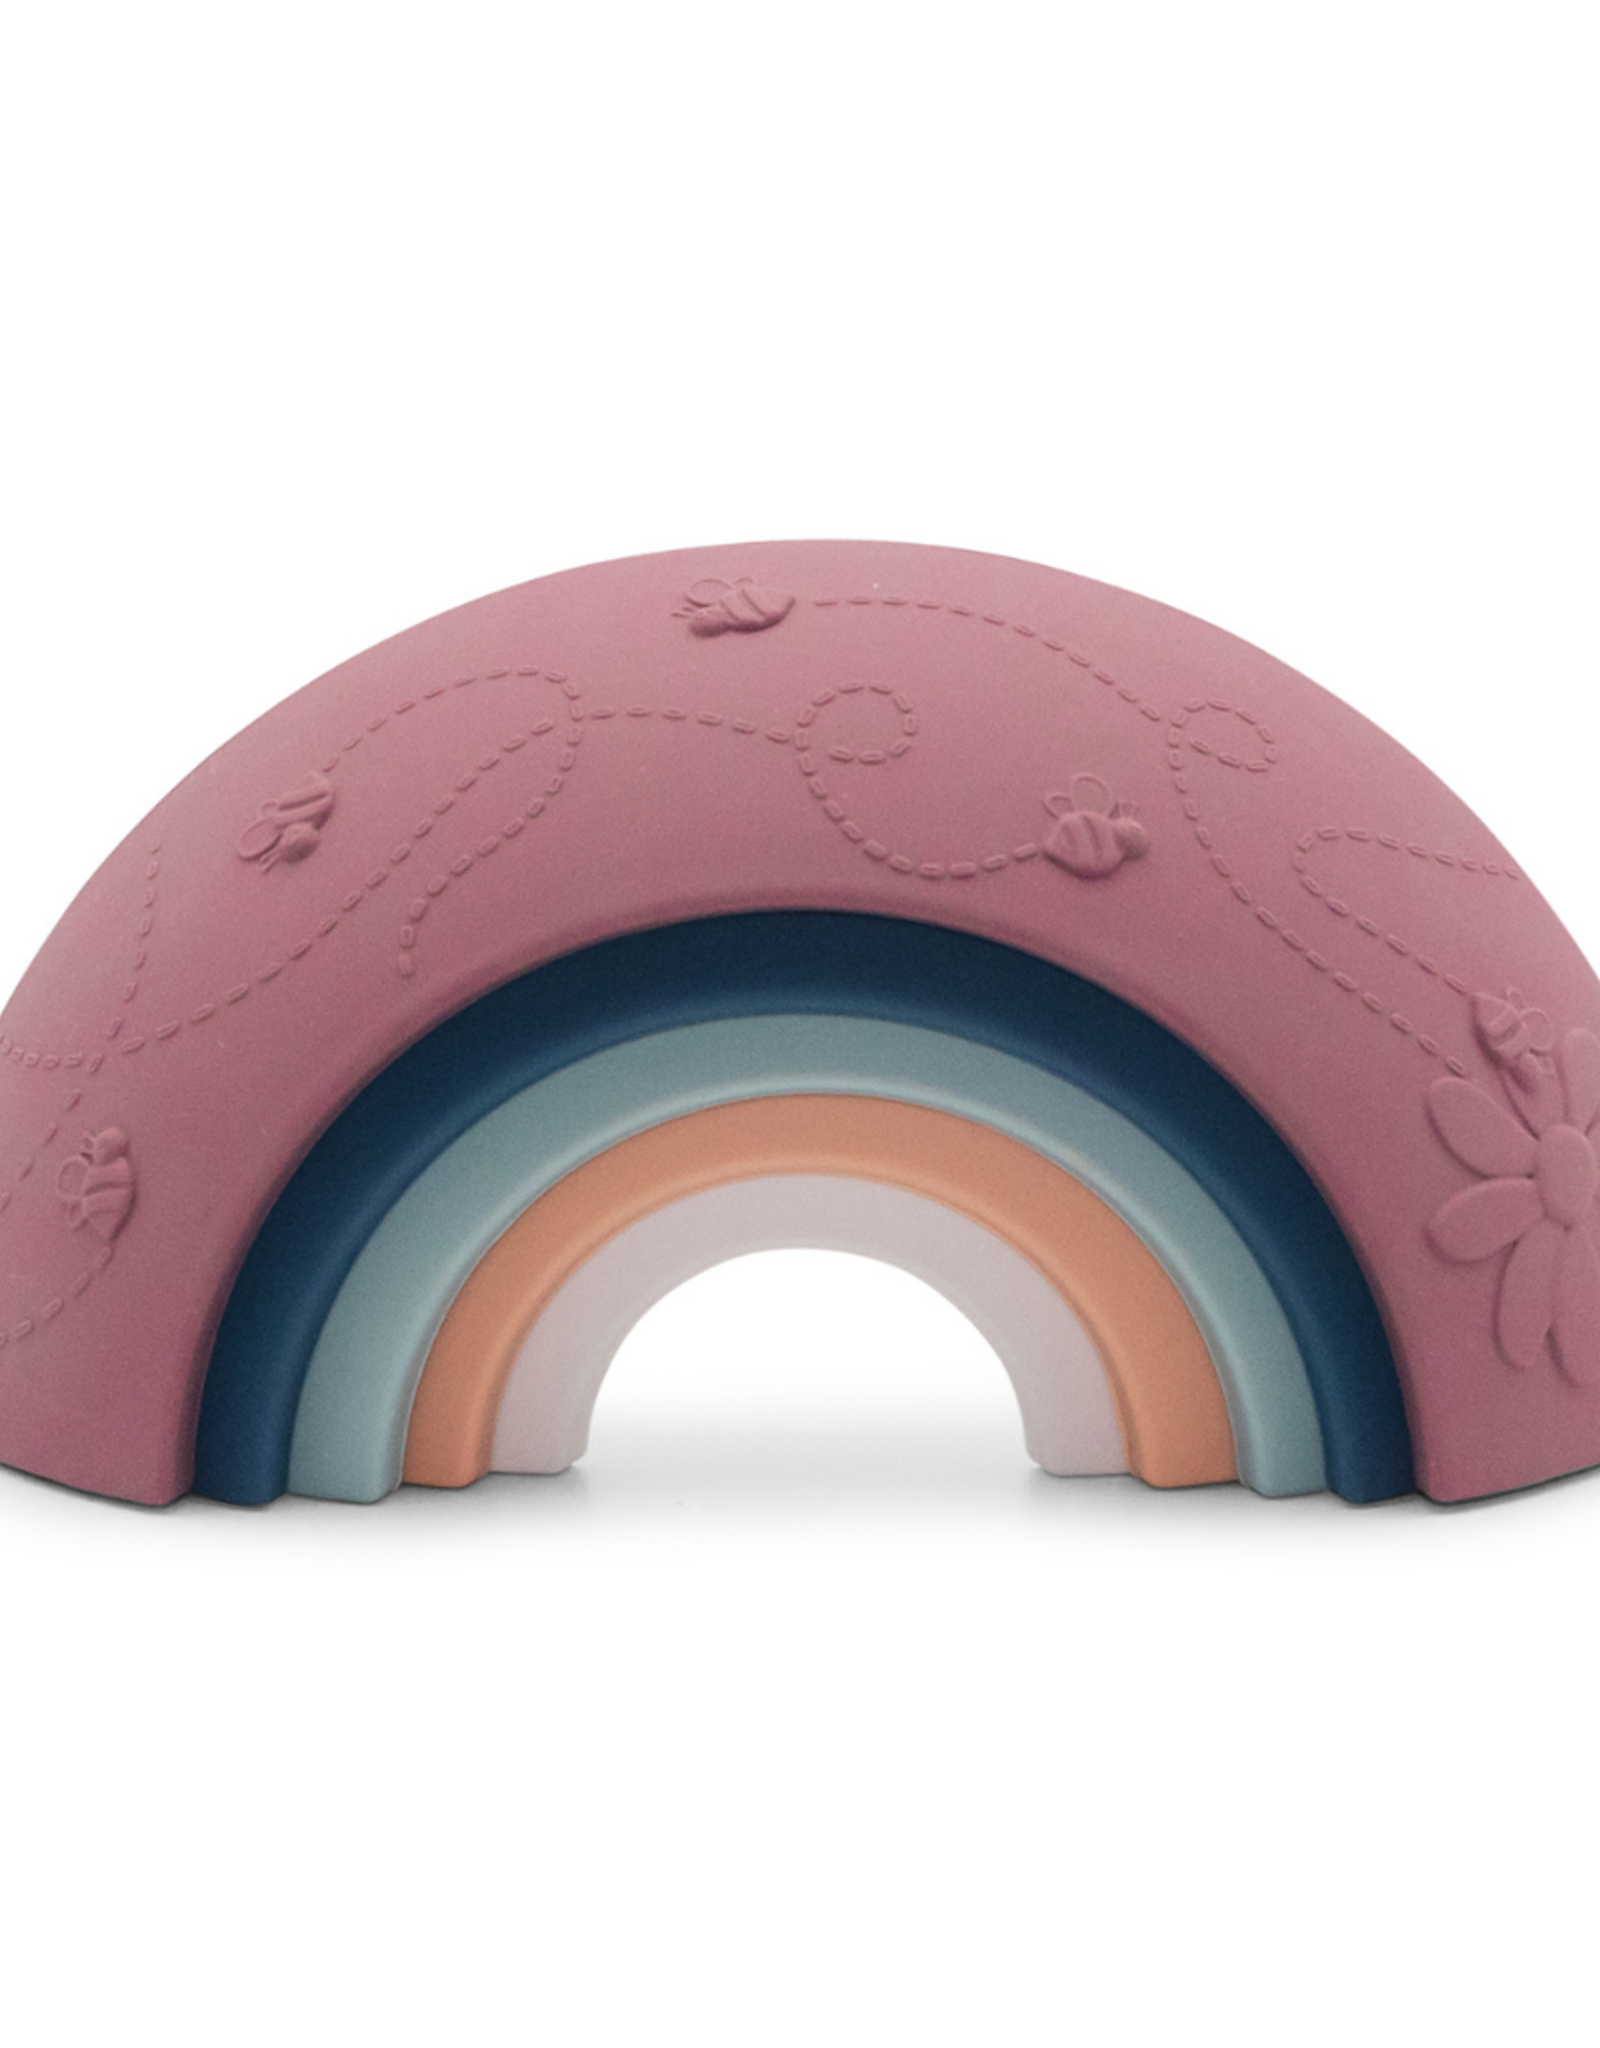 Jellystone Designs Jellystone - Over The Rainbow Earth